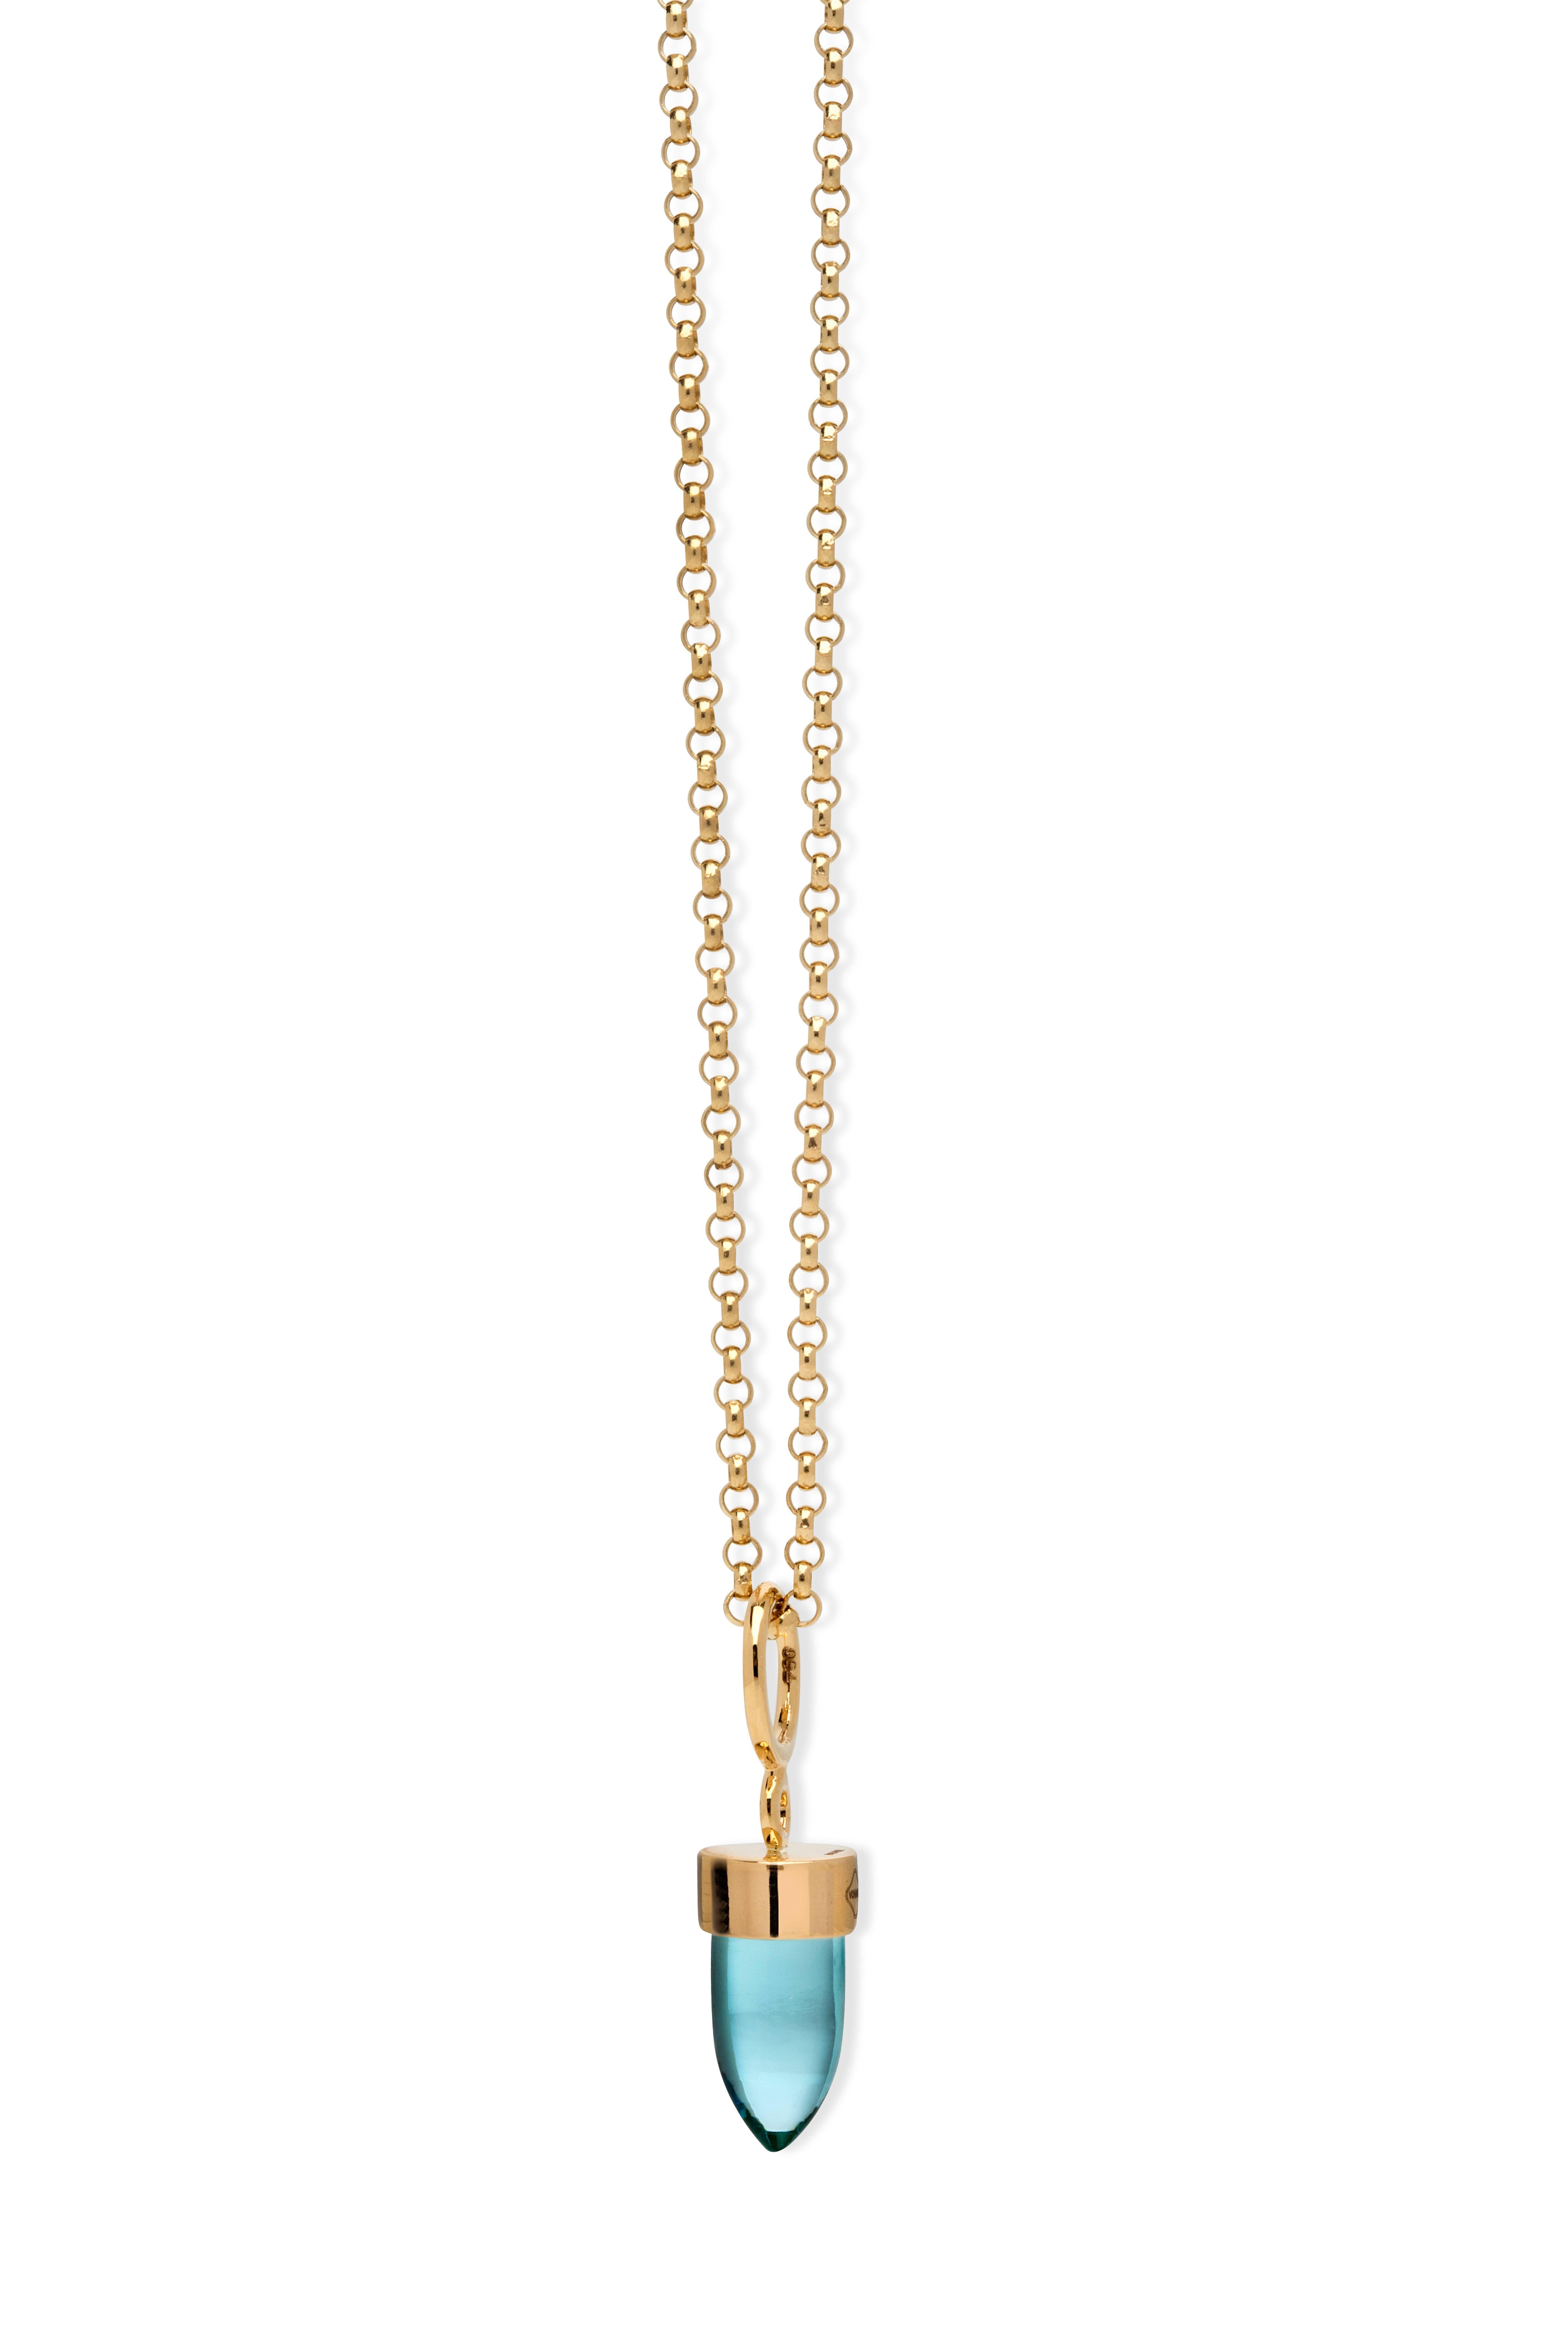 MAVIADA's Modern Minimalist Teal Quartz Stone 18 Karat Gold Pendant Necklace For Sale 3